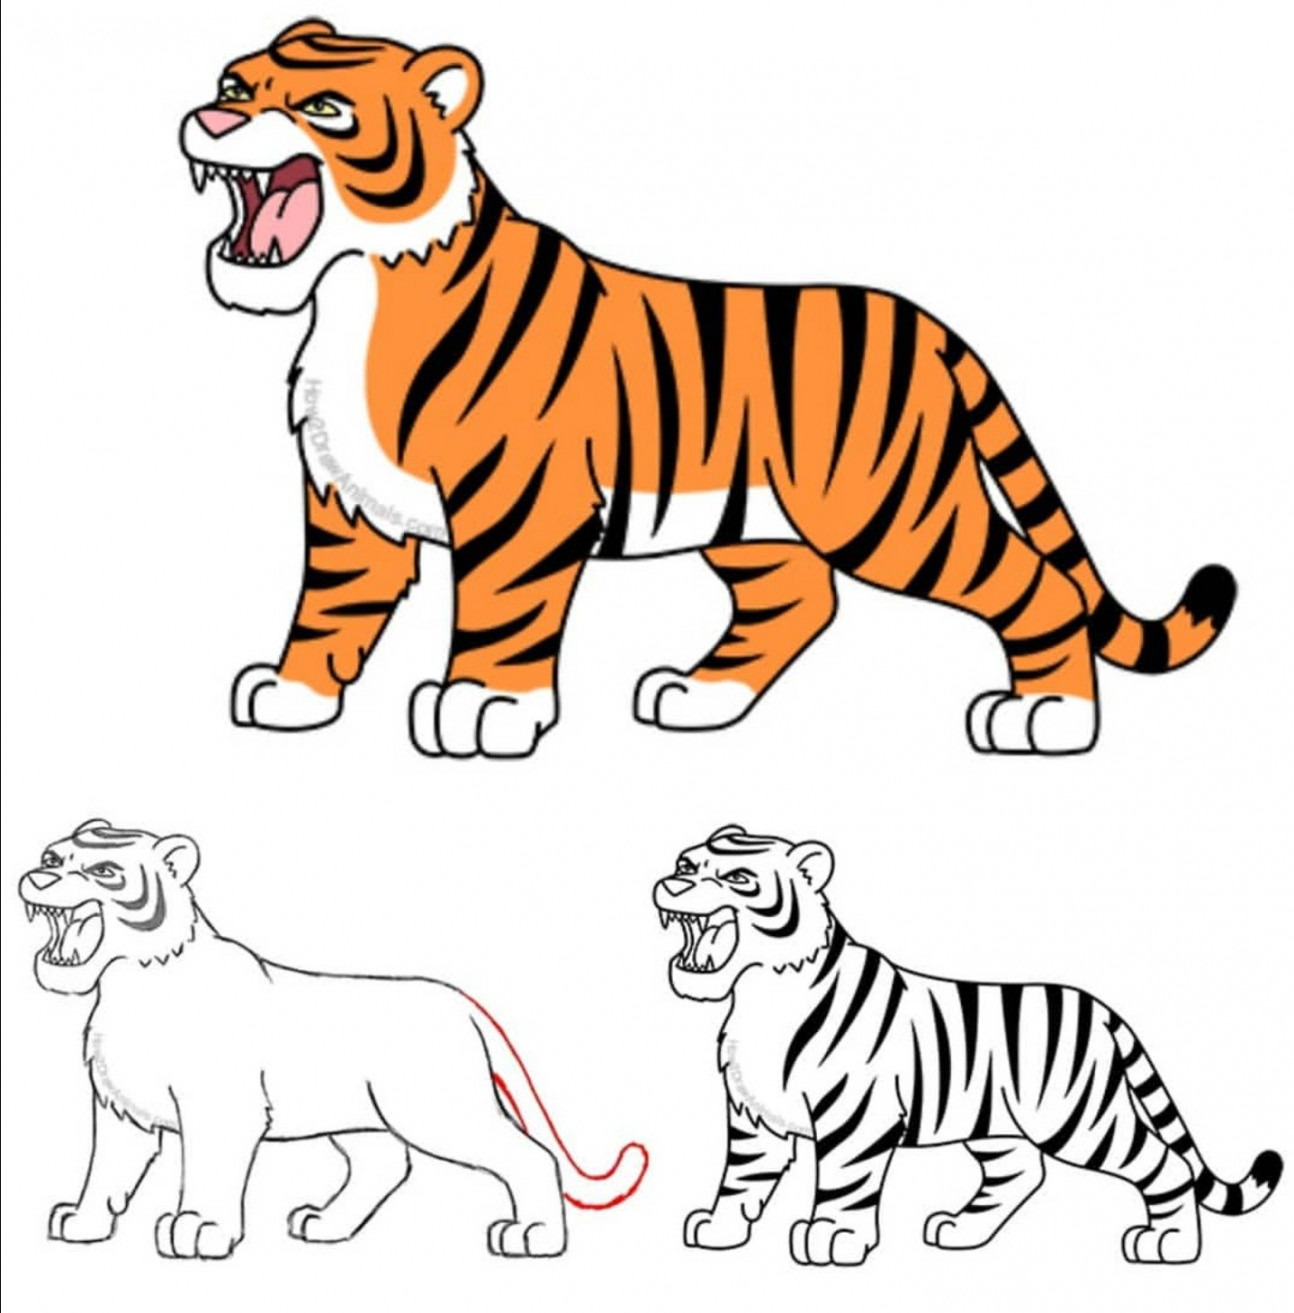 How to draw a cartoon tiger #tiger #cartoon #illustration